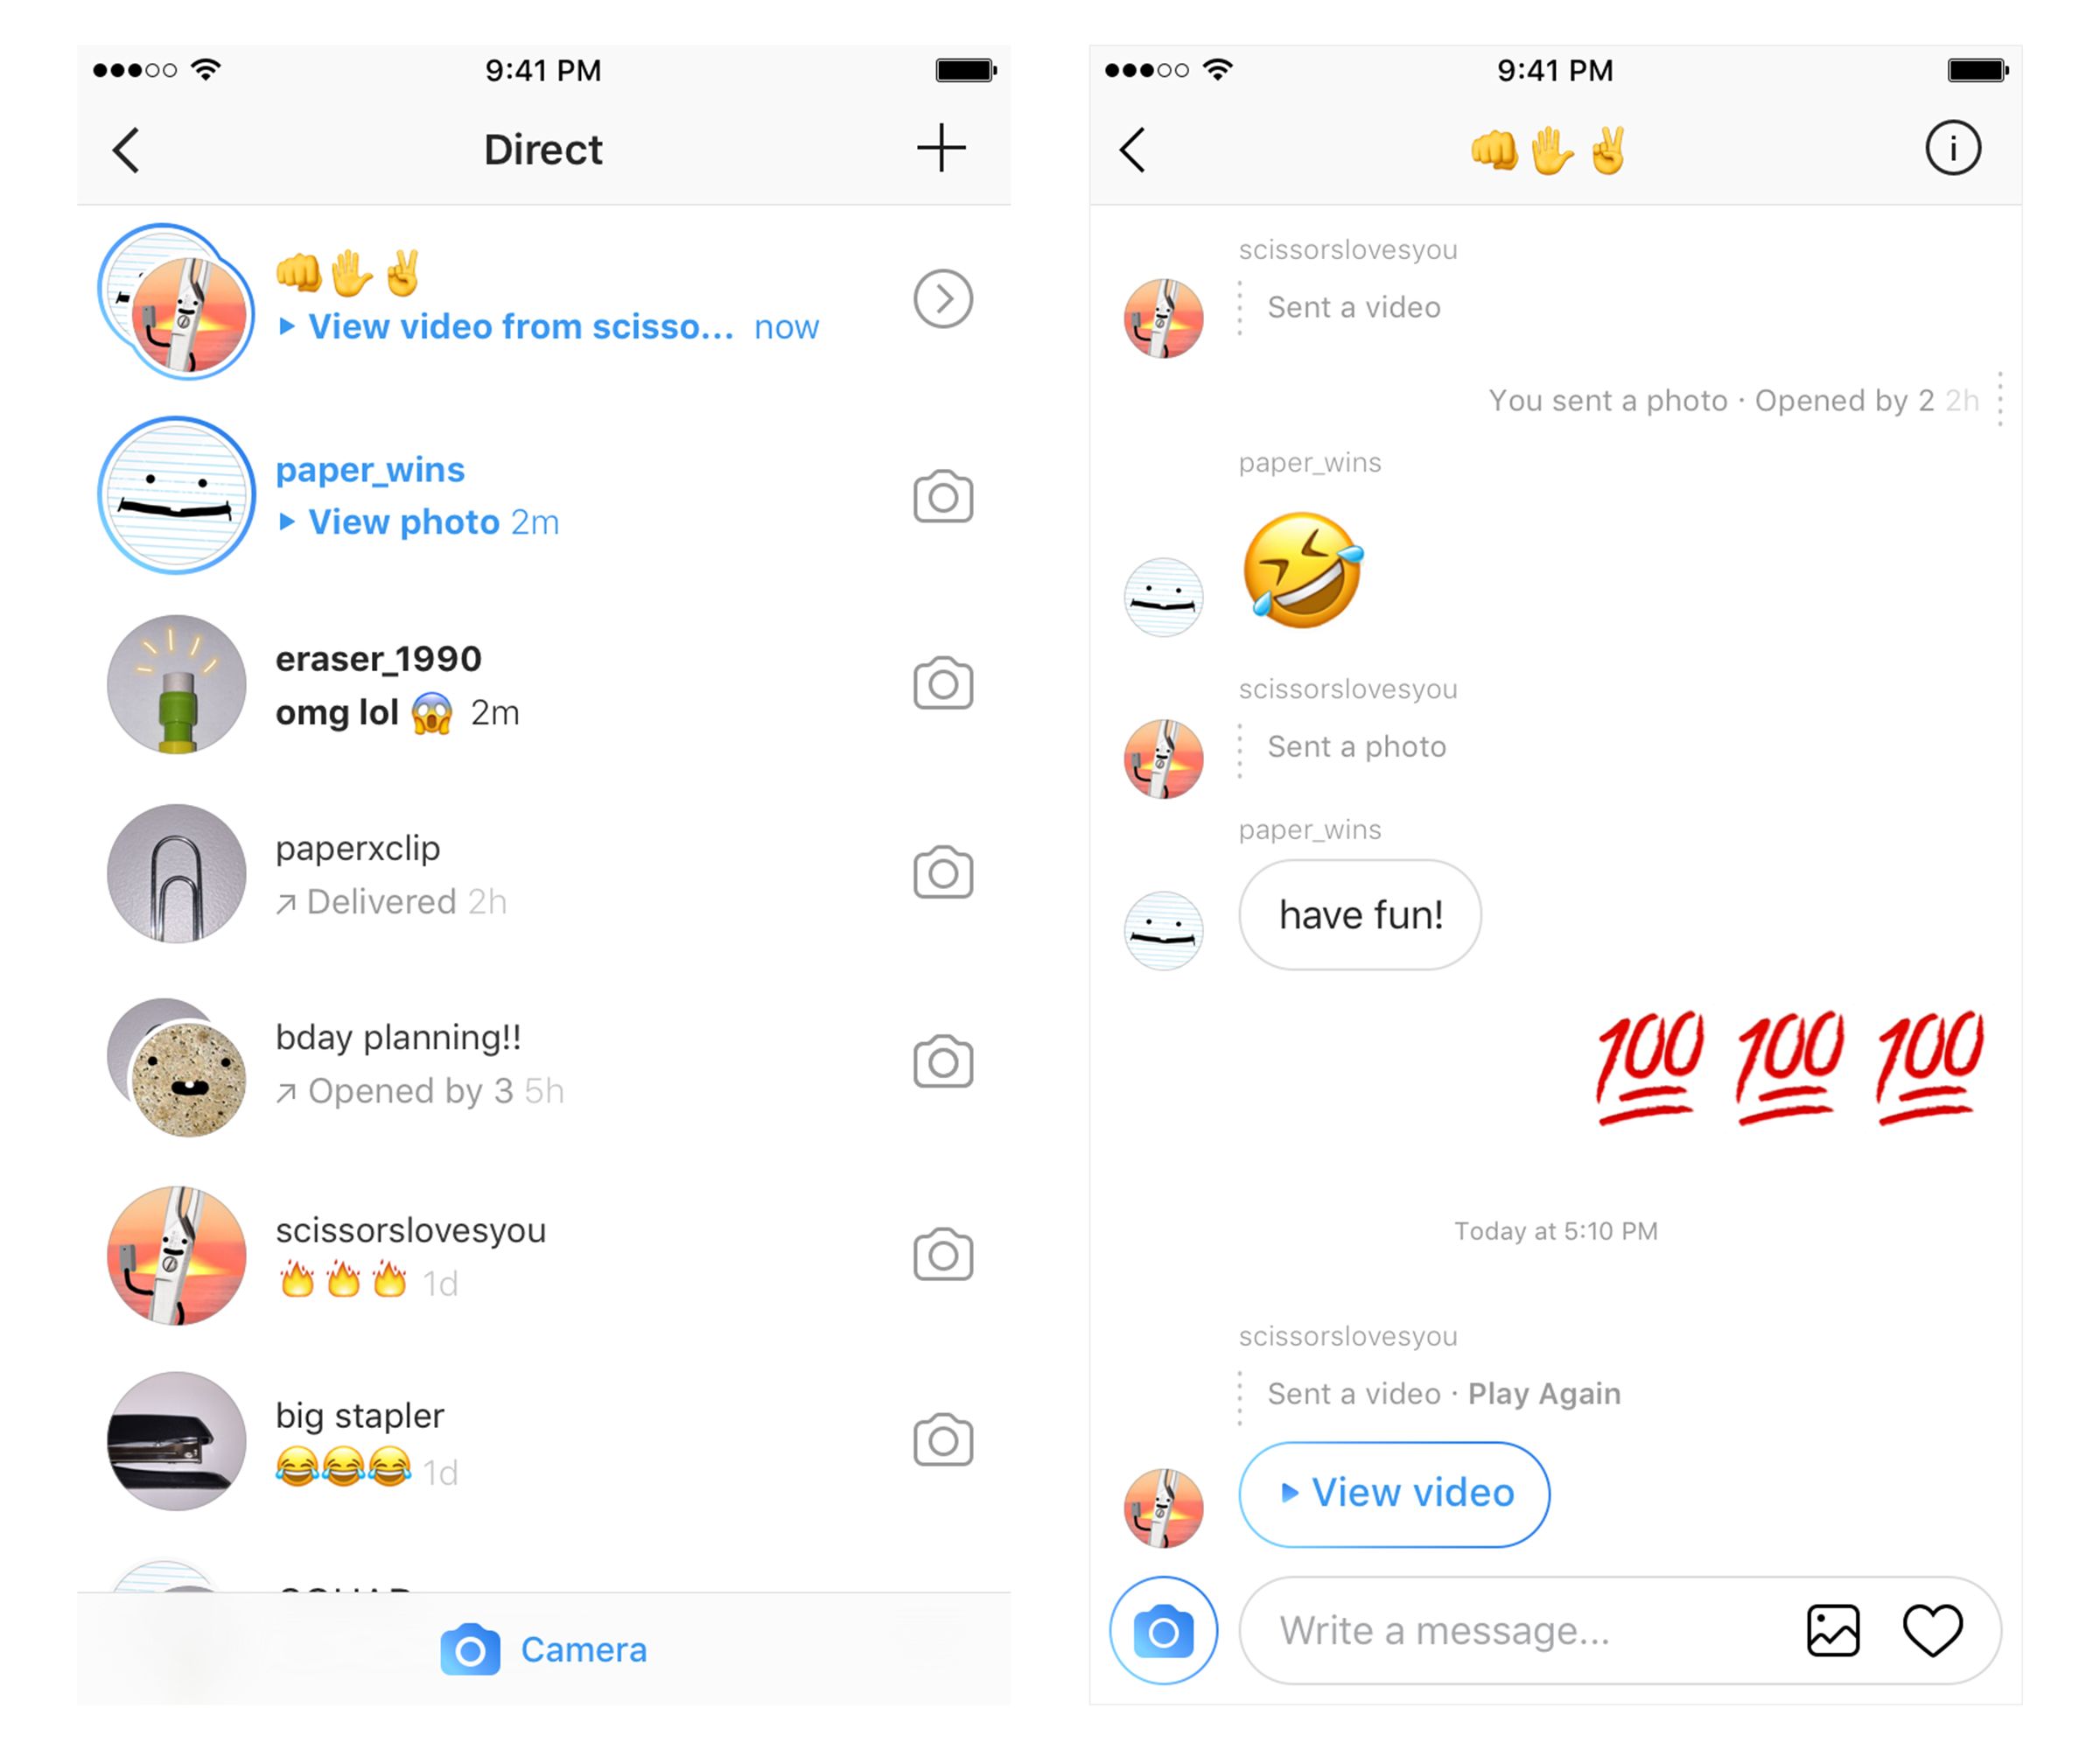 Instagram Testing Separate Messaging App - channelnews